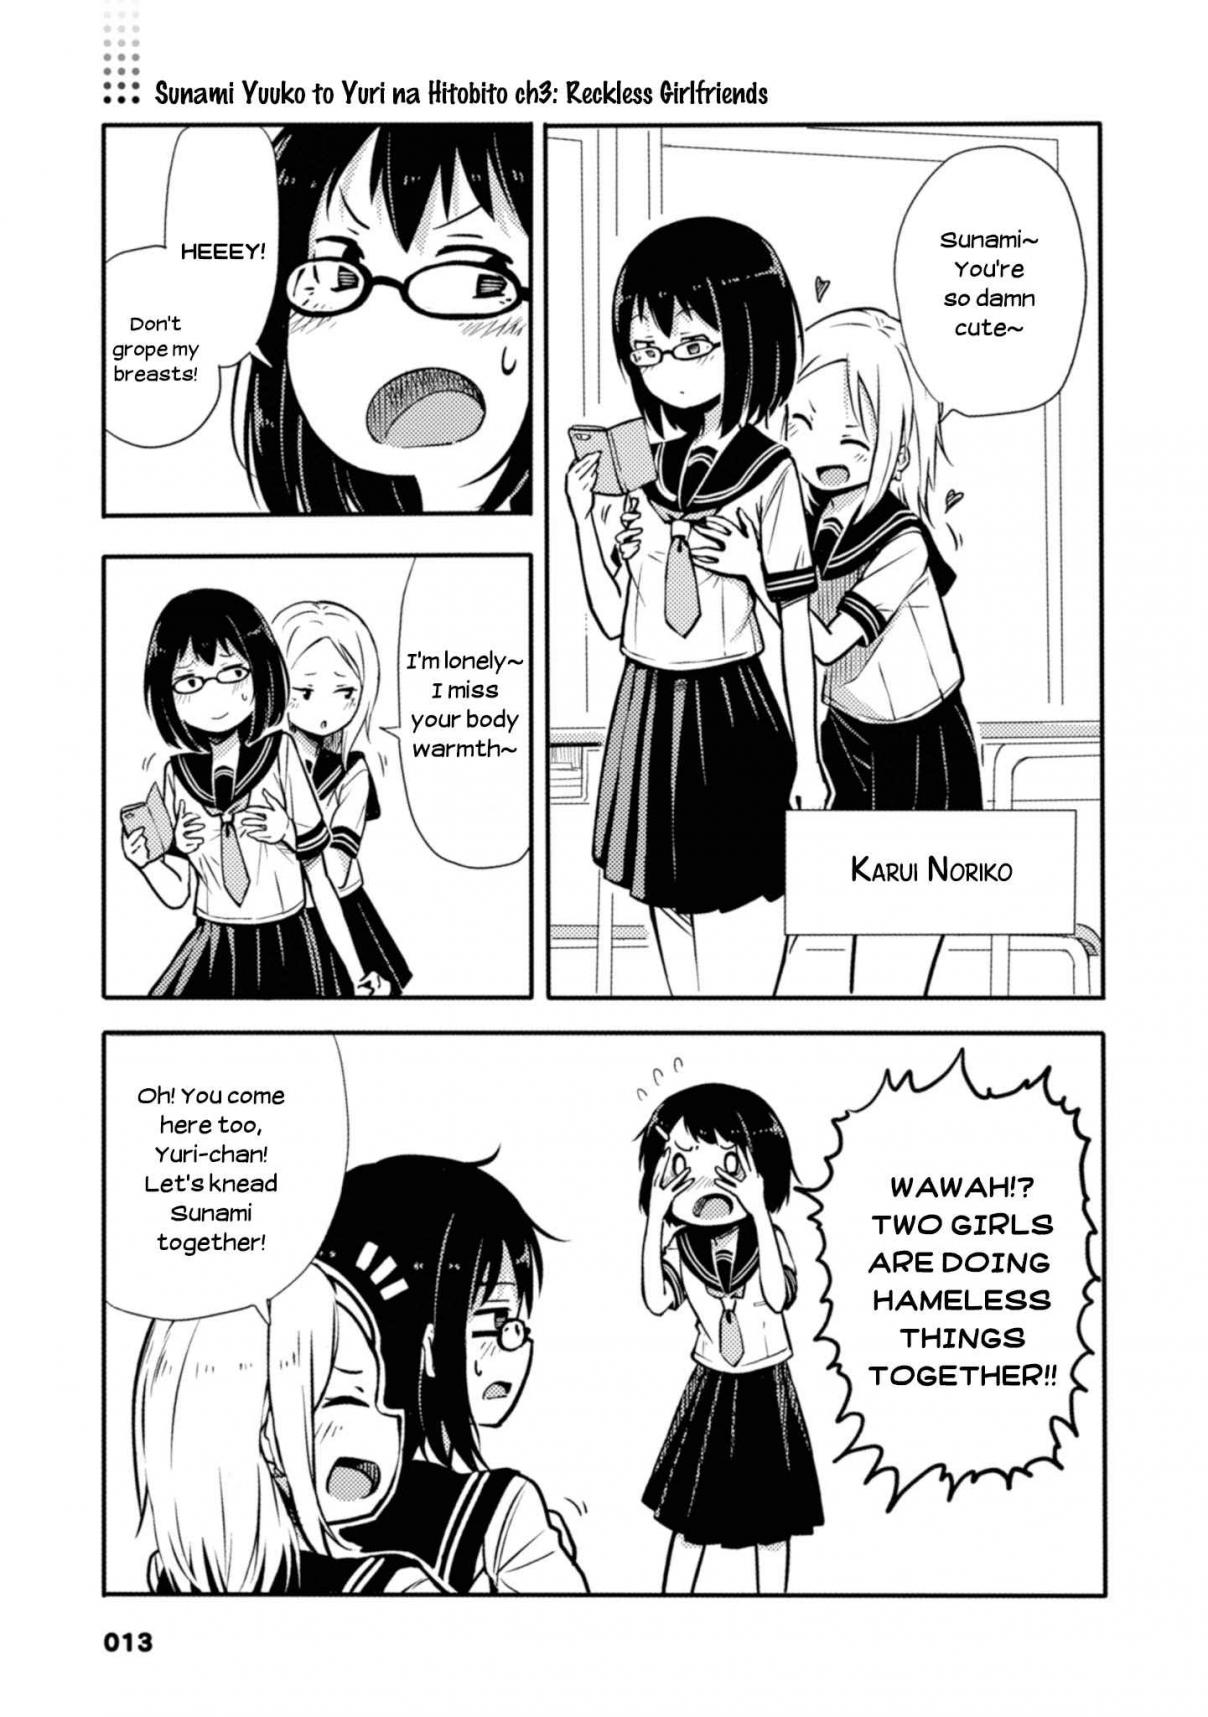 Sunami Yuuko to Yuri na Hitobito Vol. 1 Ch. 3 Reckless Girlfriends